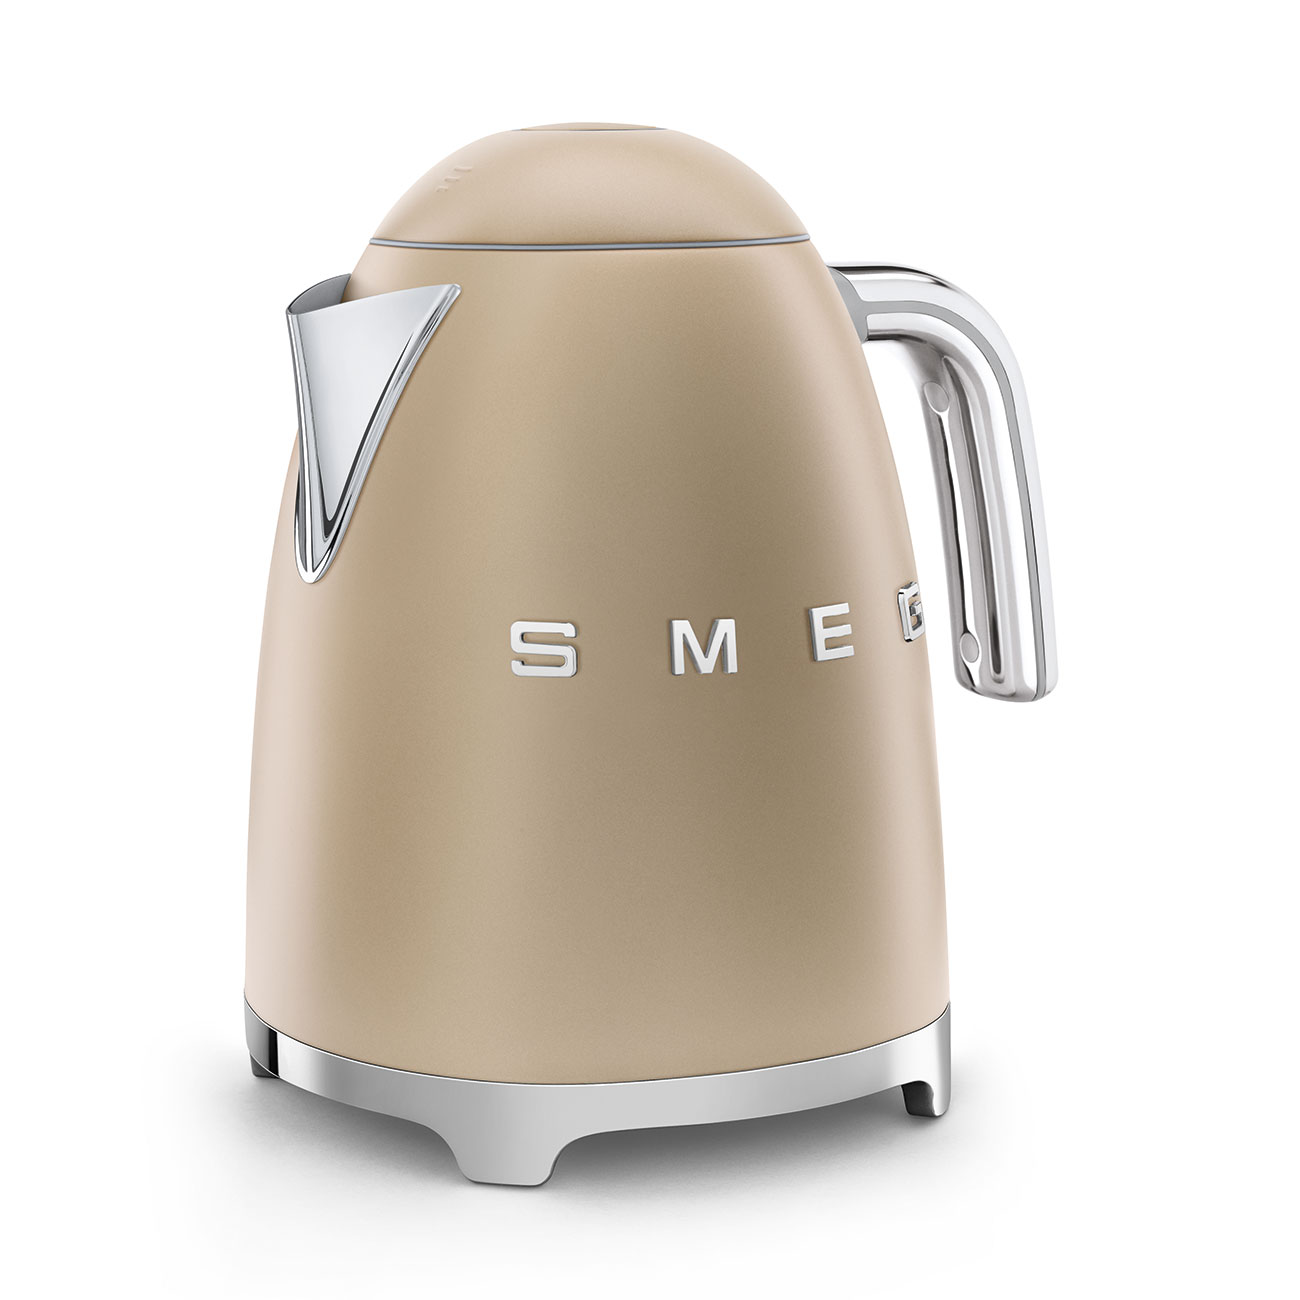 Smeg Basic Electric Kettle, Copper #basic #copper #electric #kettle #smeg  #kitchen